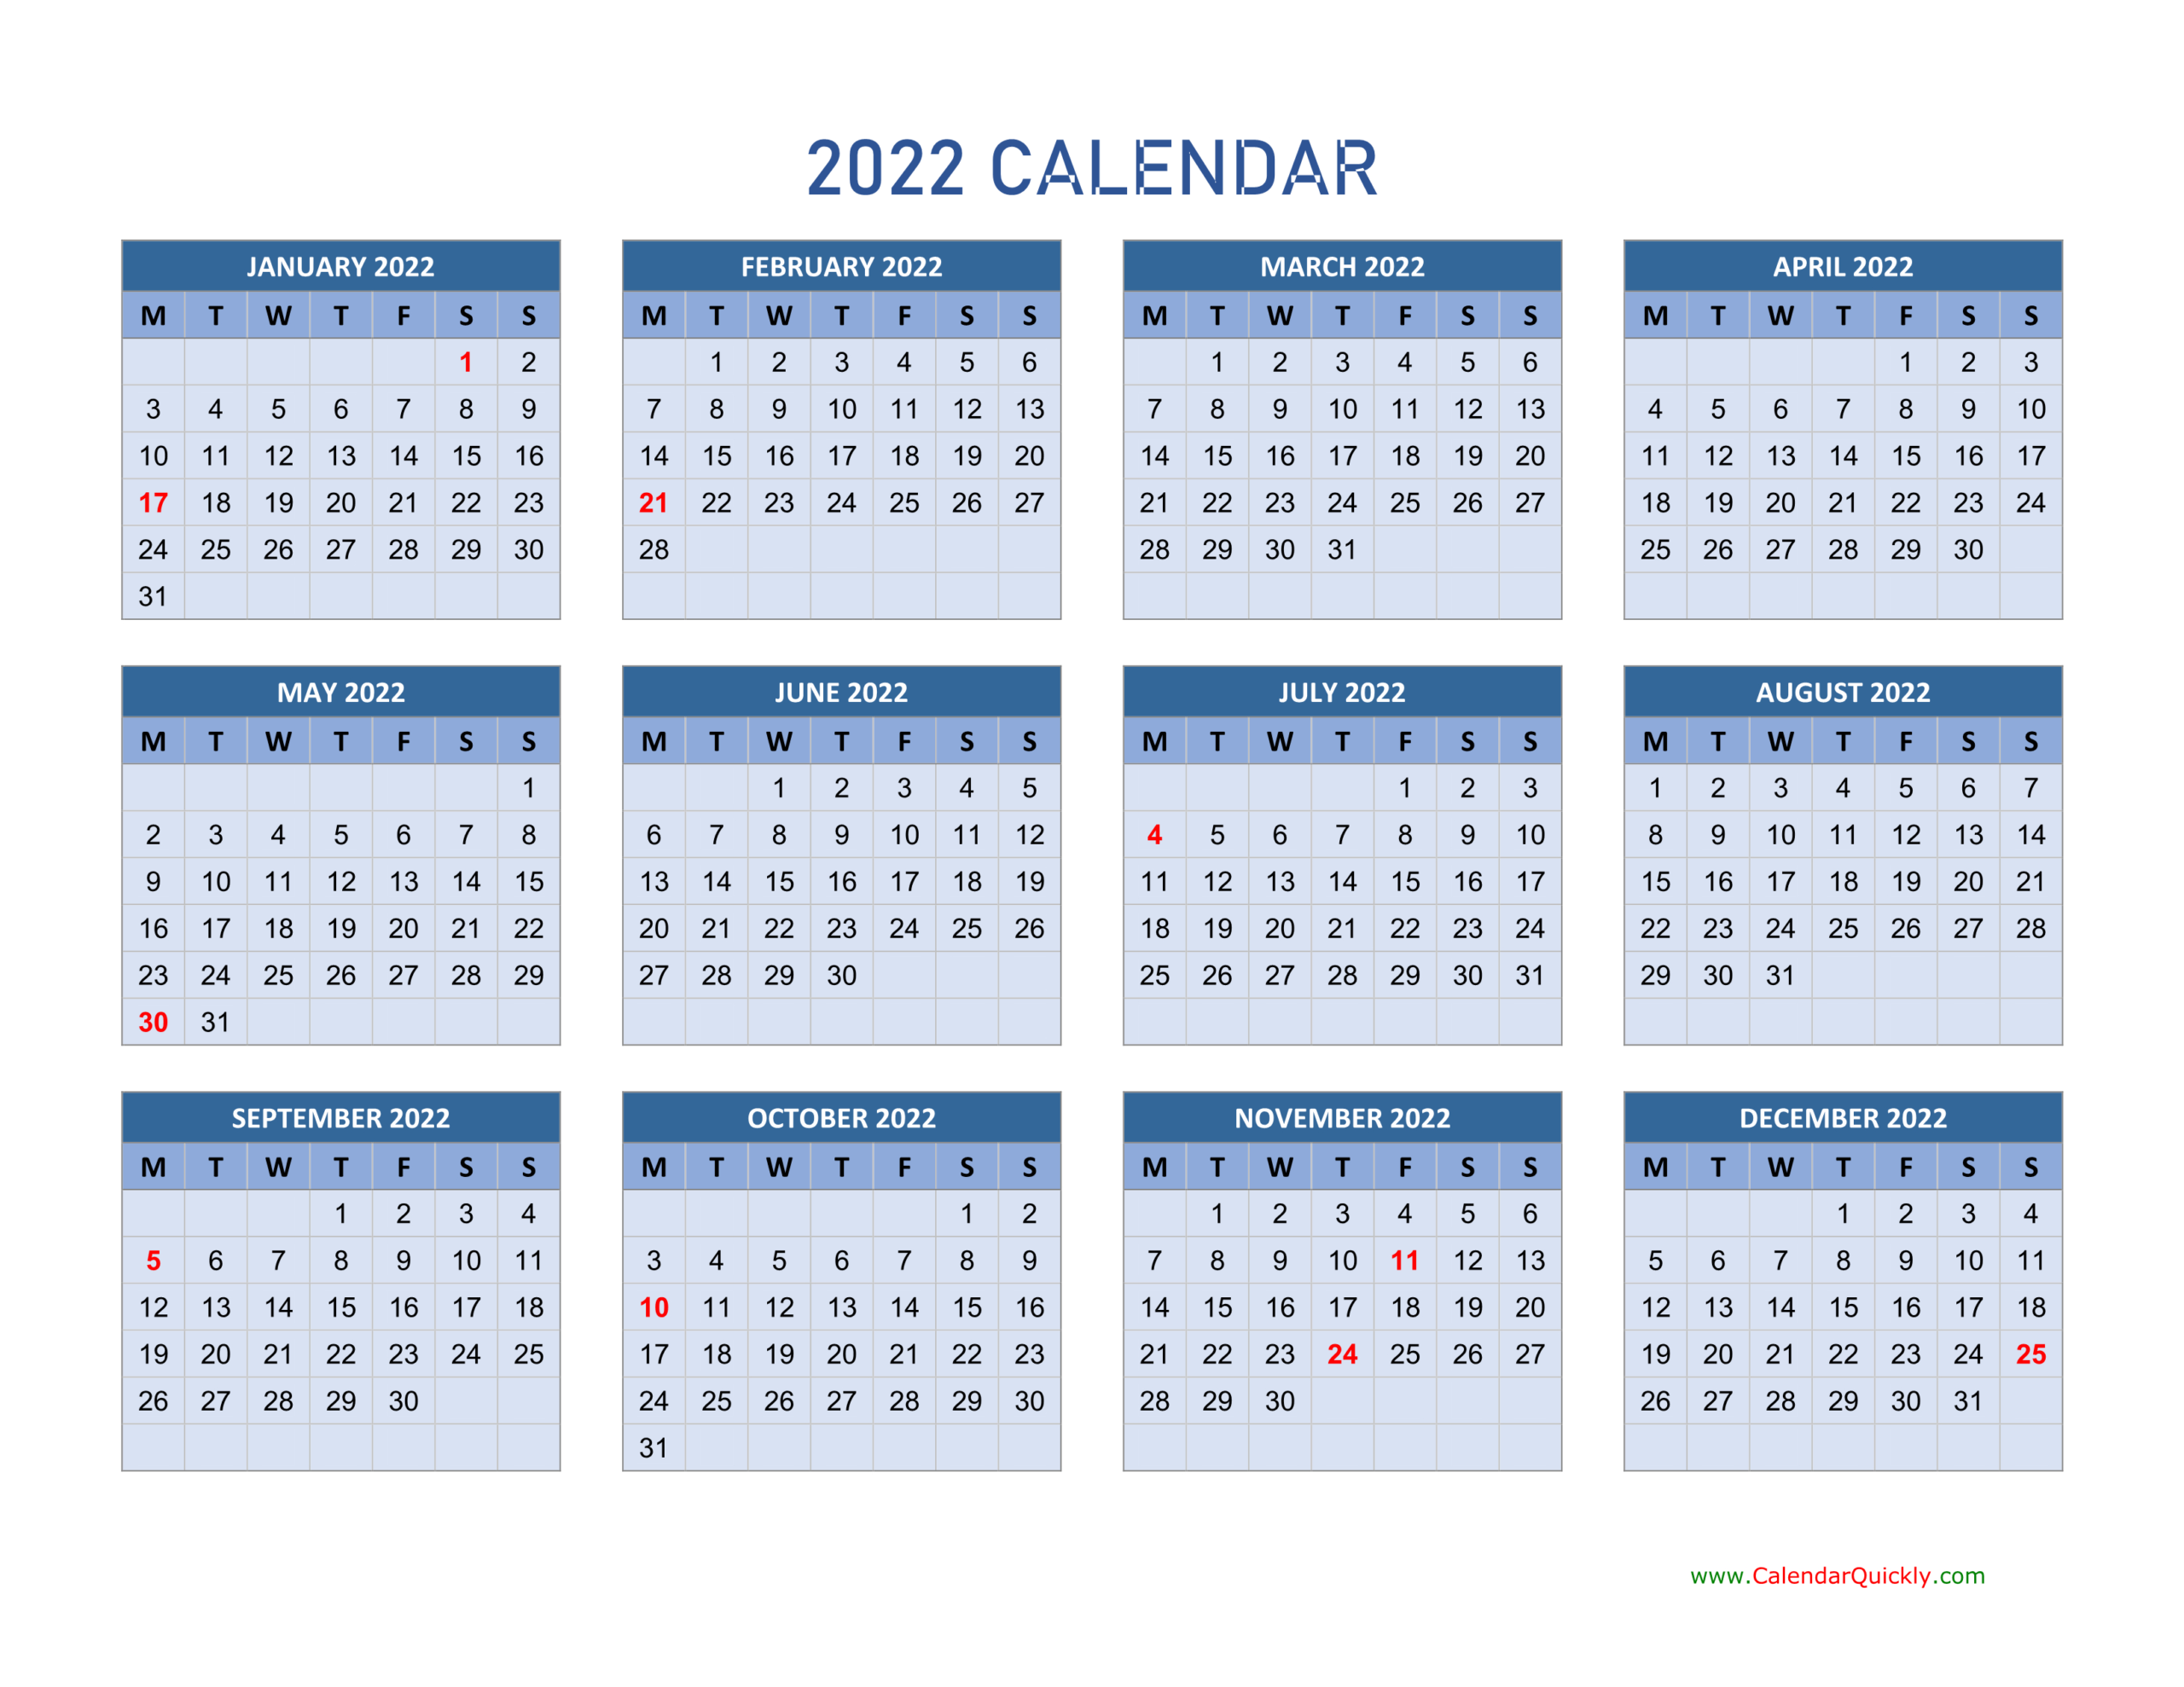 Monday 2022 Calendar Horizontal | Calendar Quickly throughout 2022 Calendar With Weeks